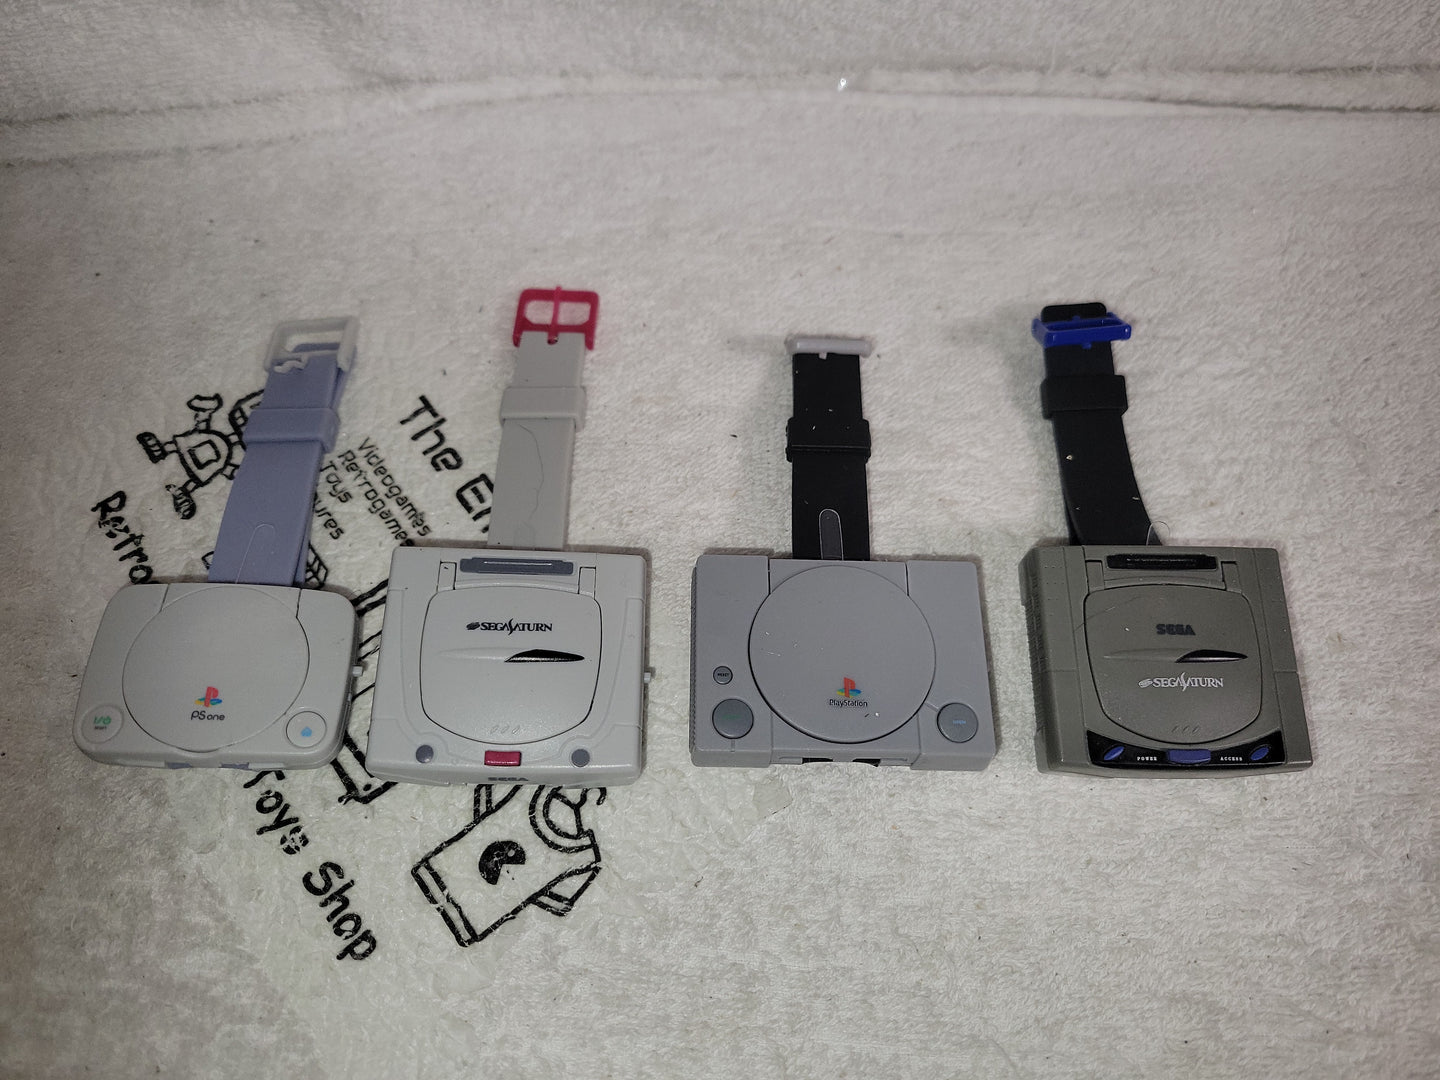 Sega Saturn & Playstation VS Watch (Complete Set of 4 Types)

- toy action figure model